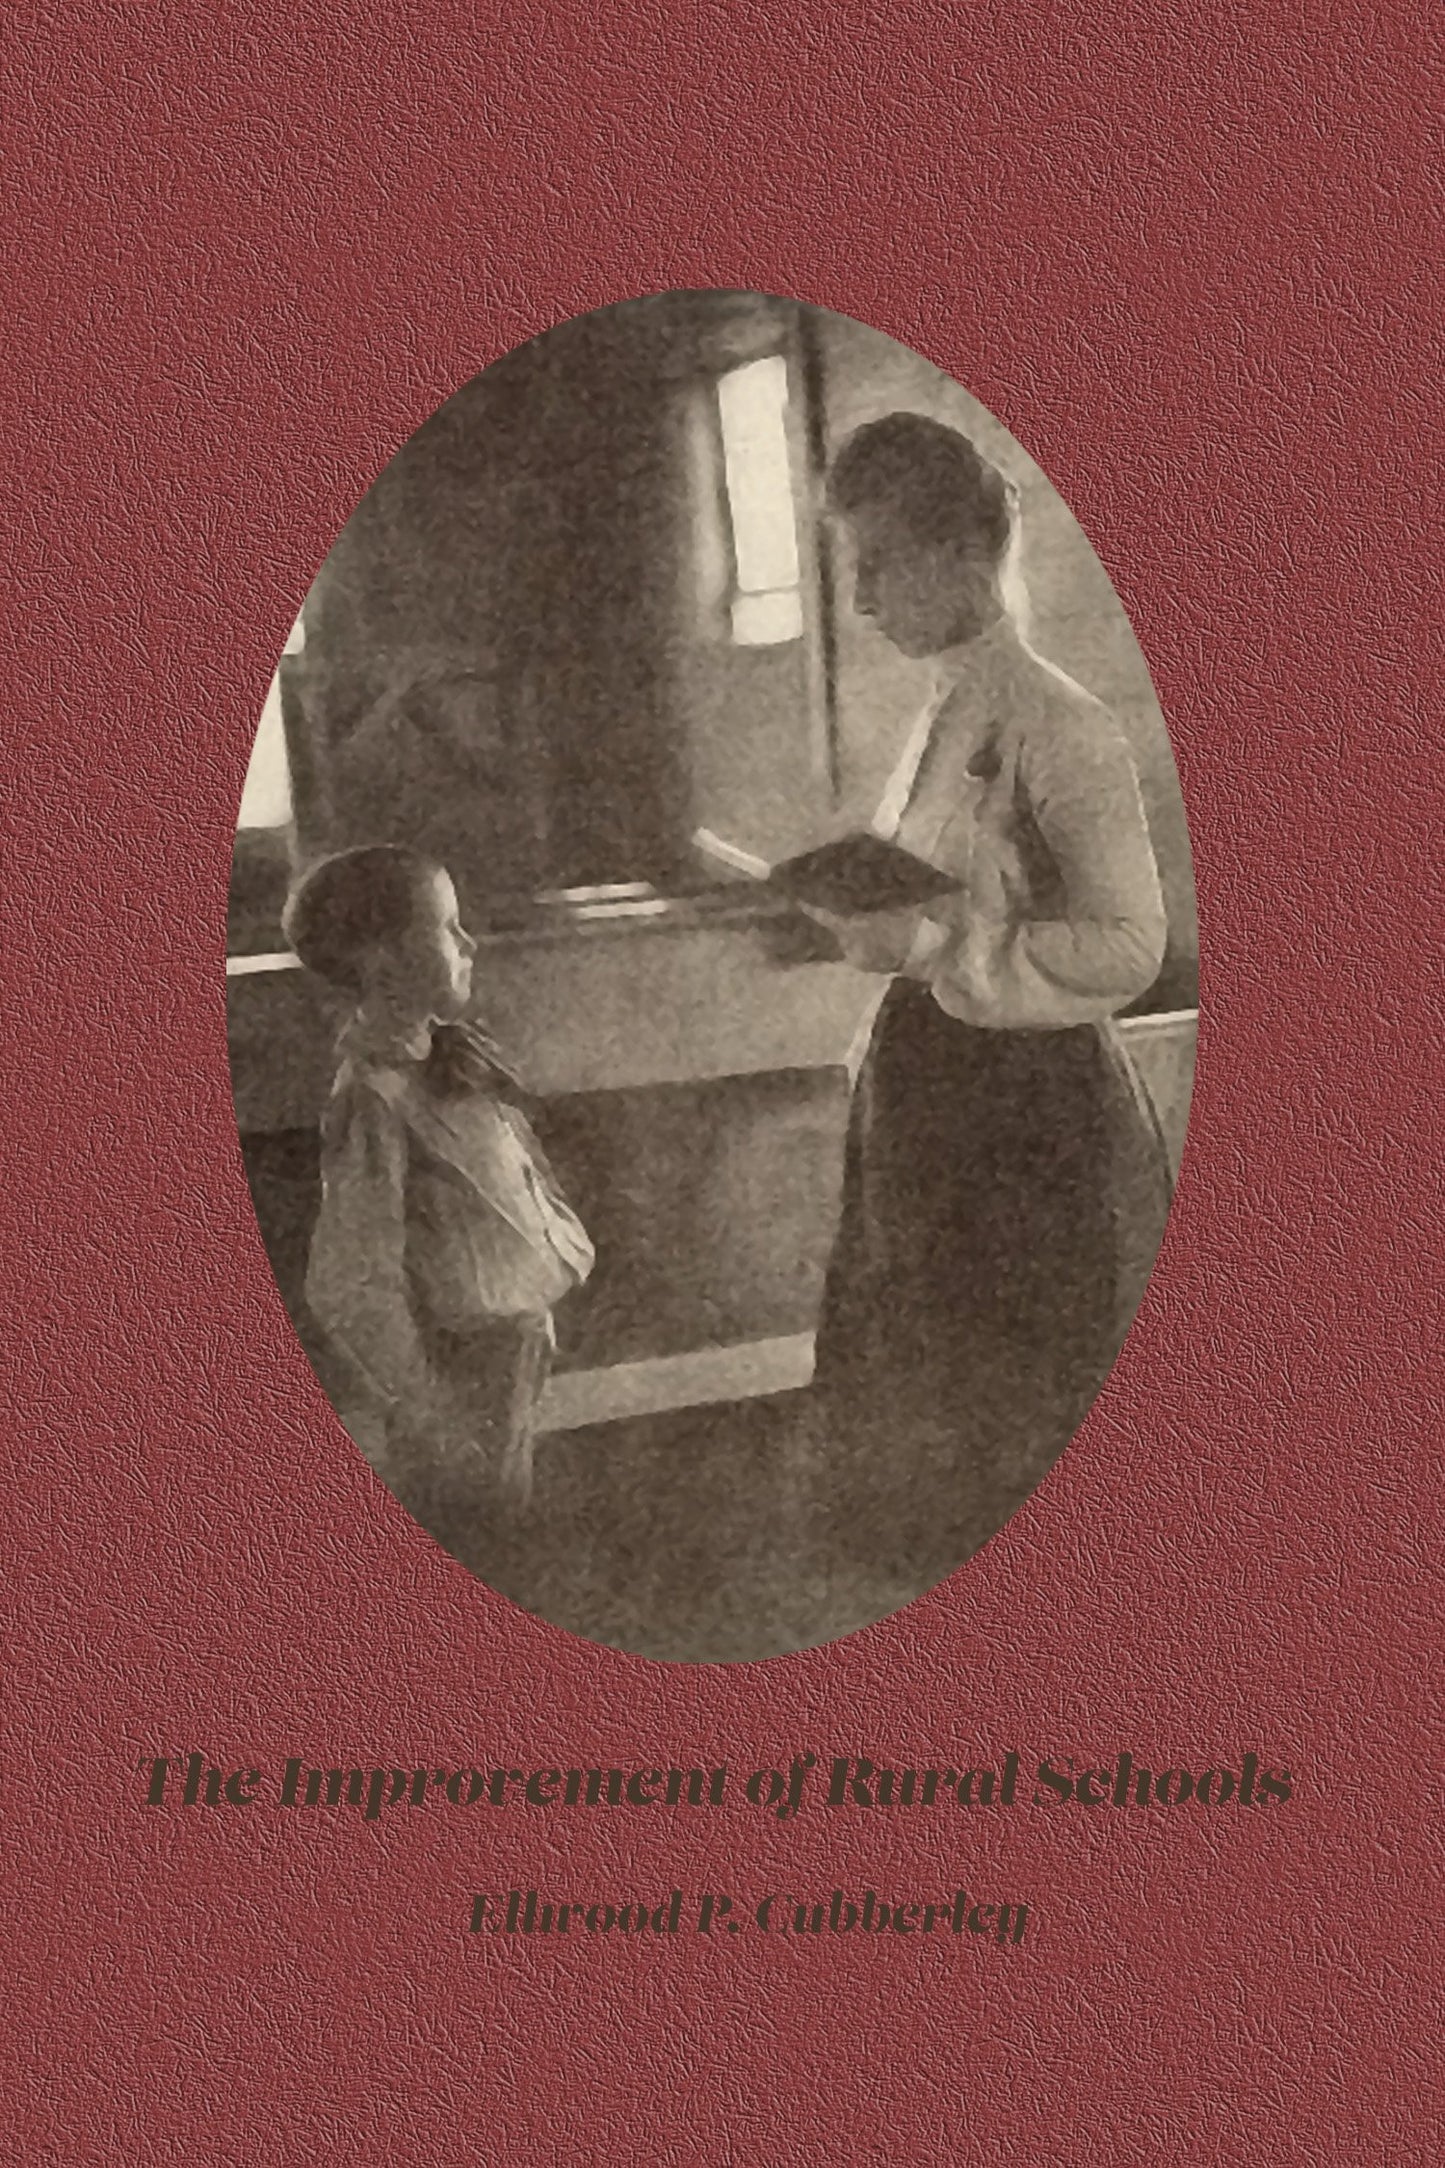 The Improvement of Rural Schools